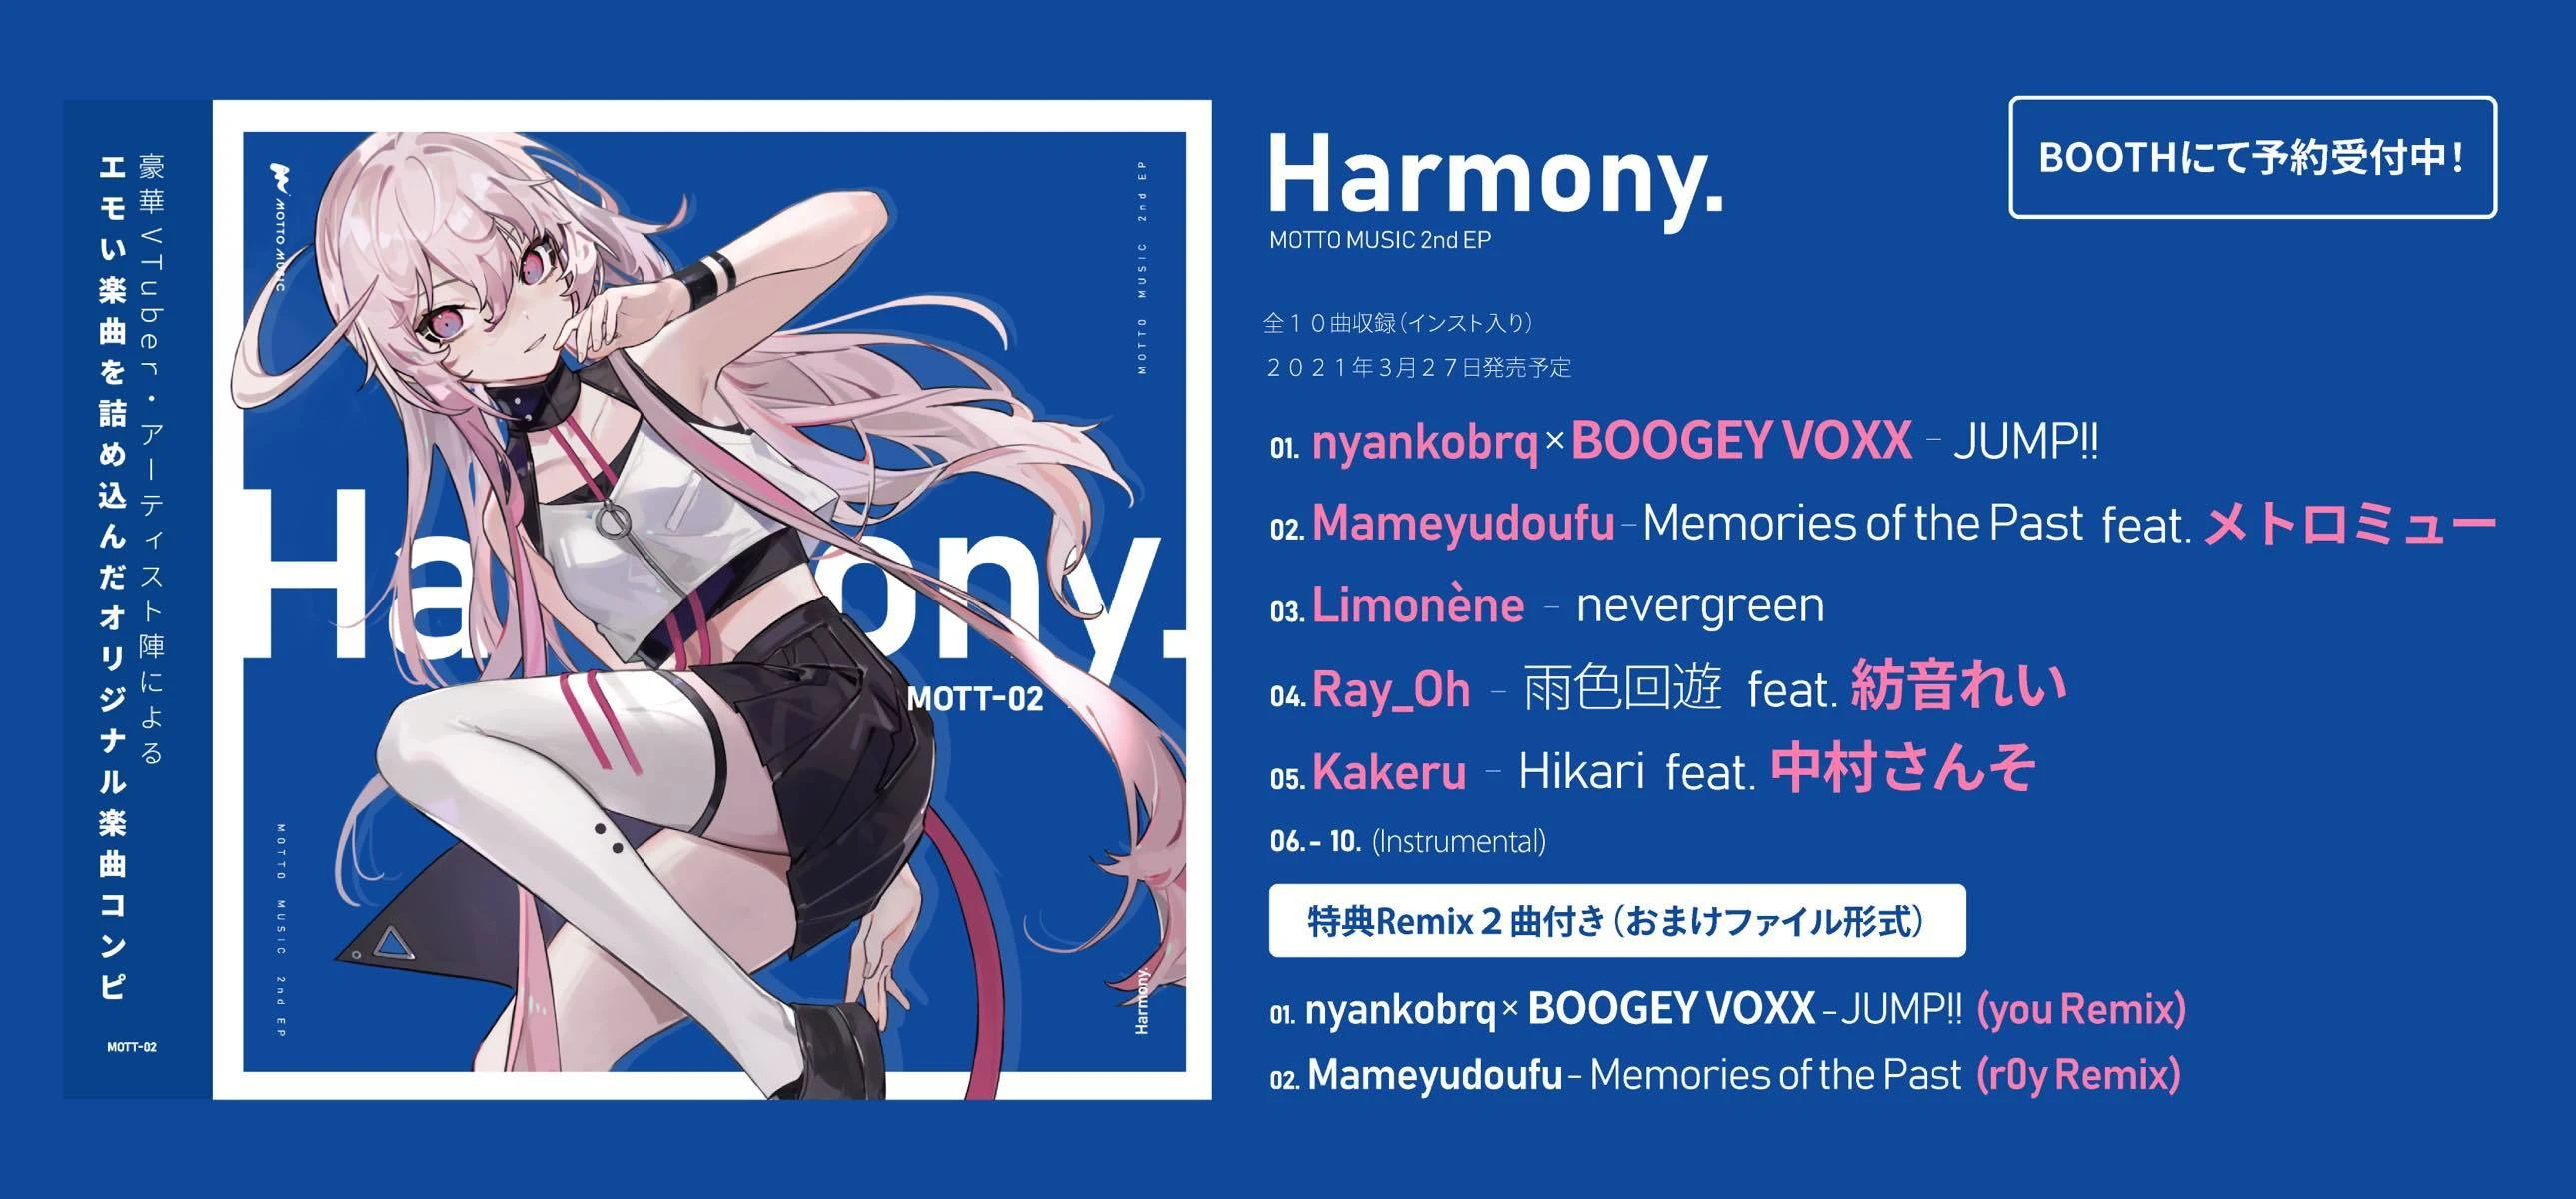 MOTTO MUSIC 2nd EP『Harmony』